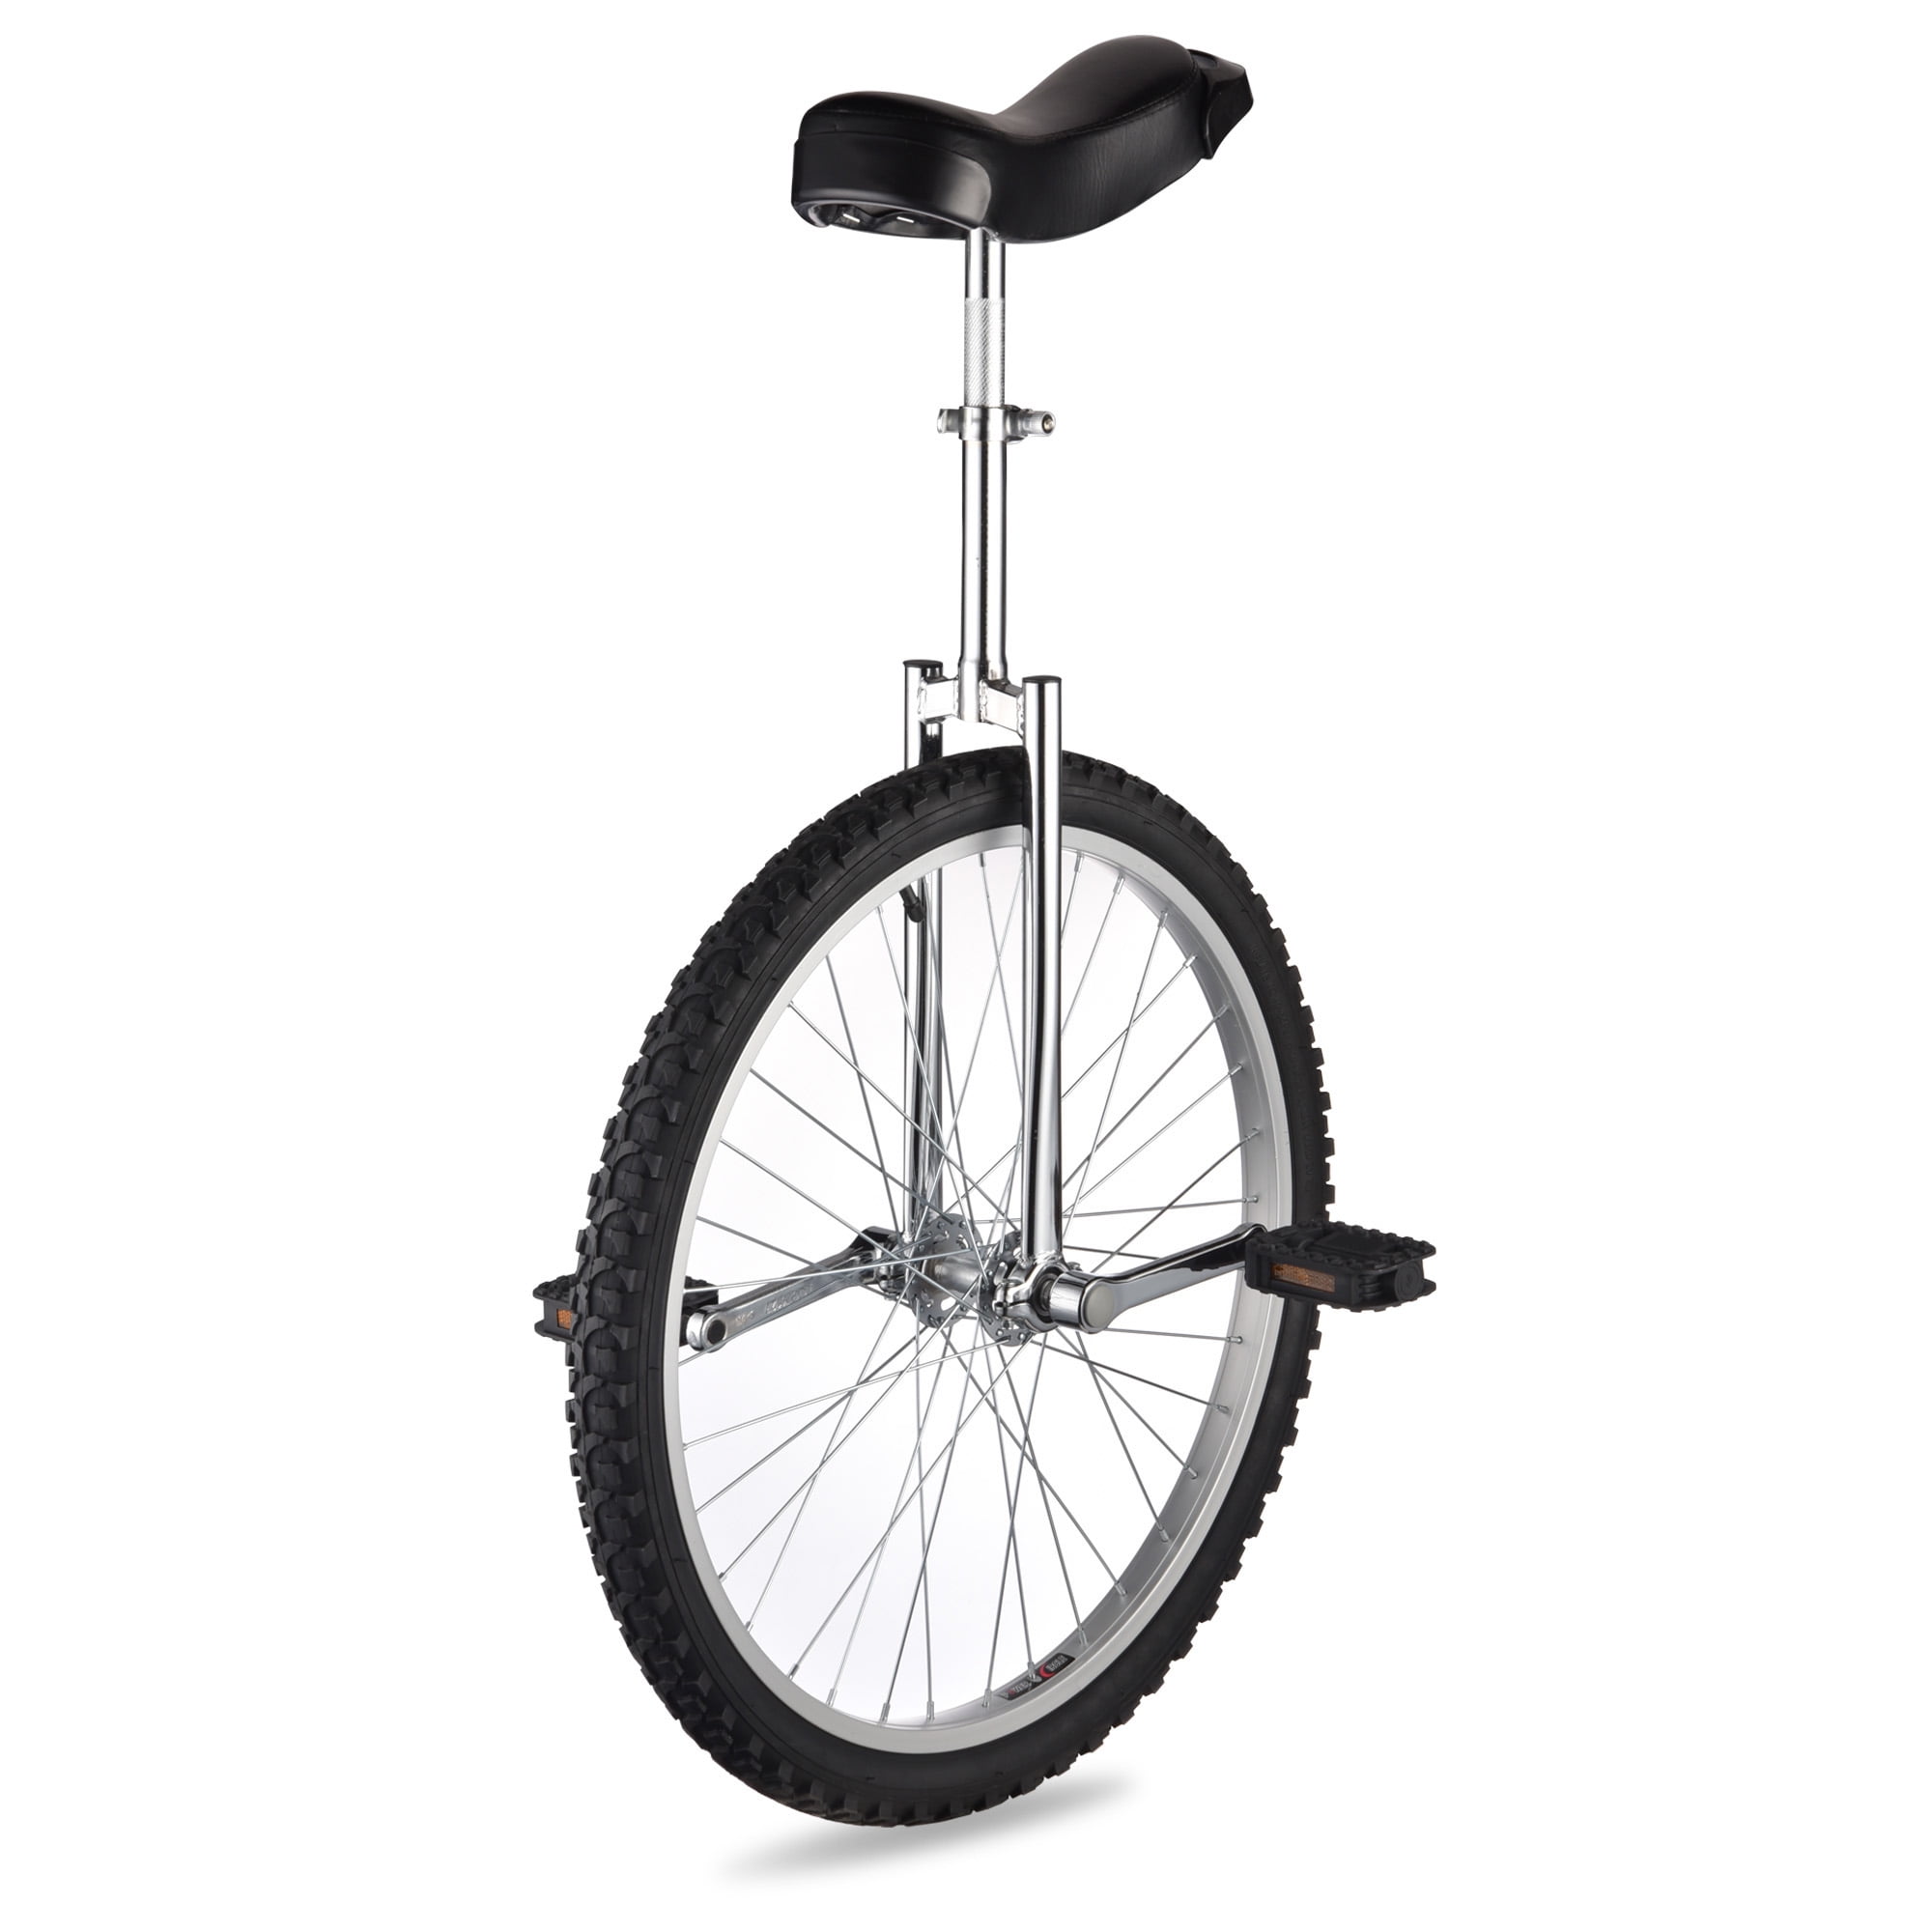 24" Butyl Tire Chrome Unicycle Wheel Cycling Mountain Exercise Balance Fitness 